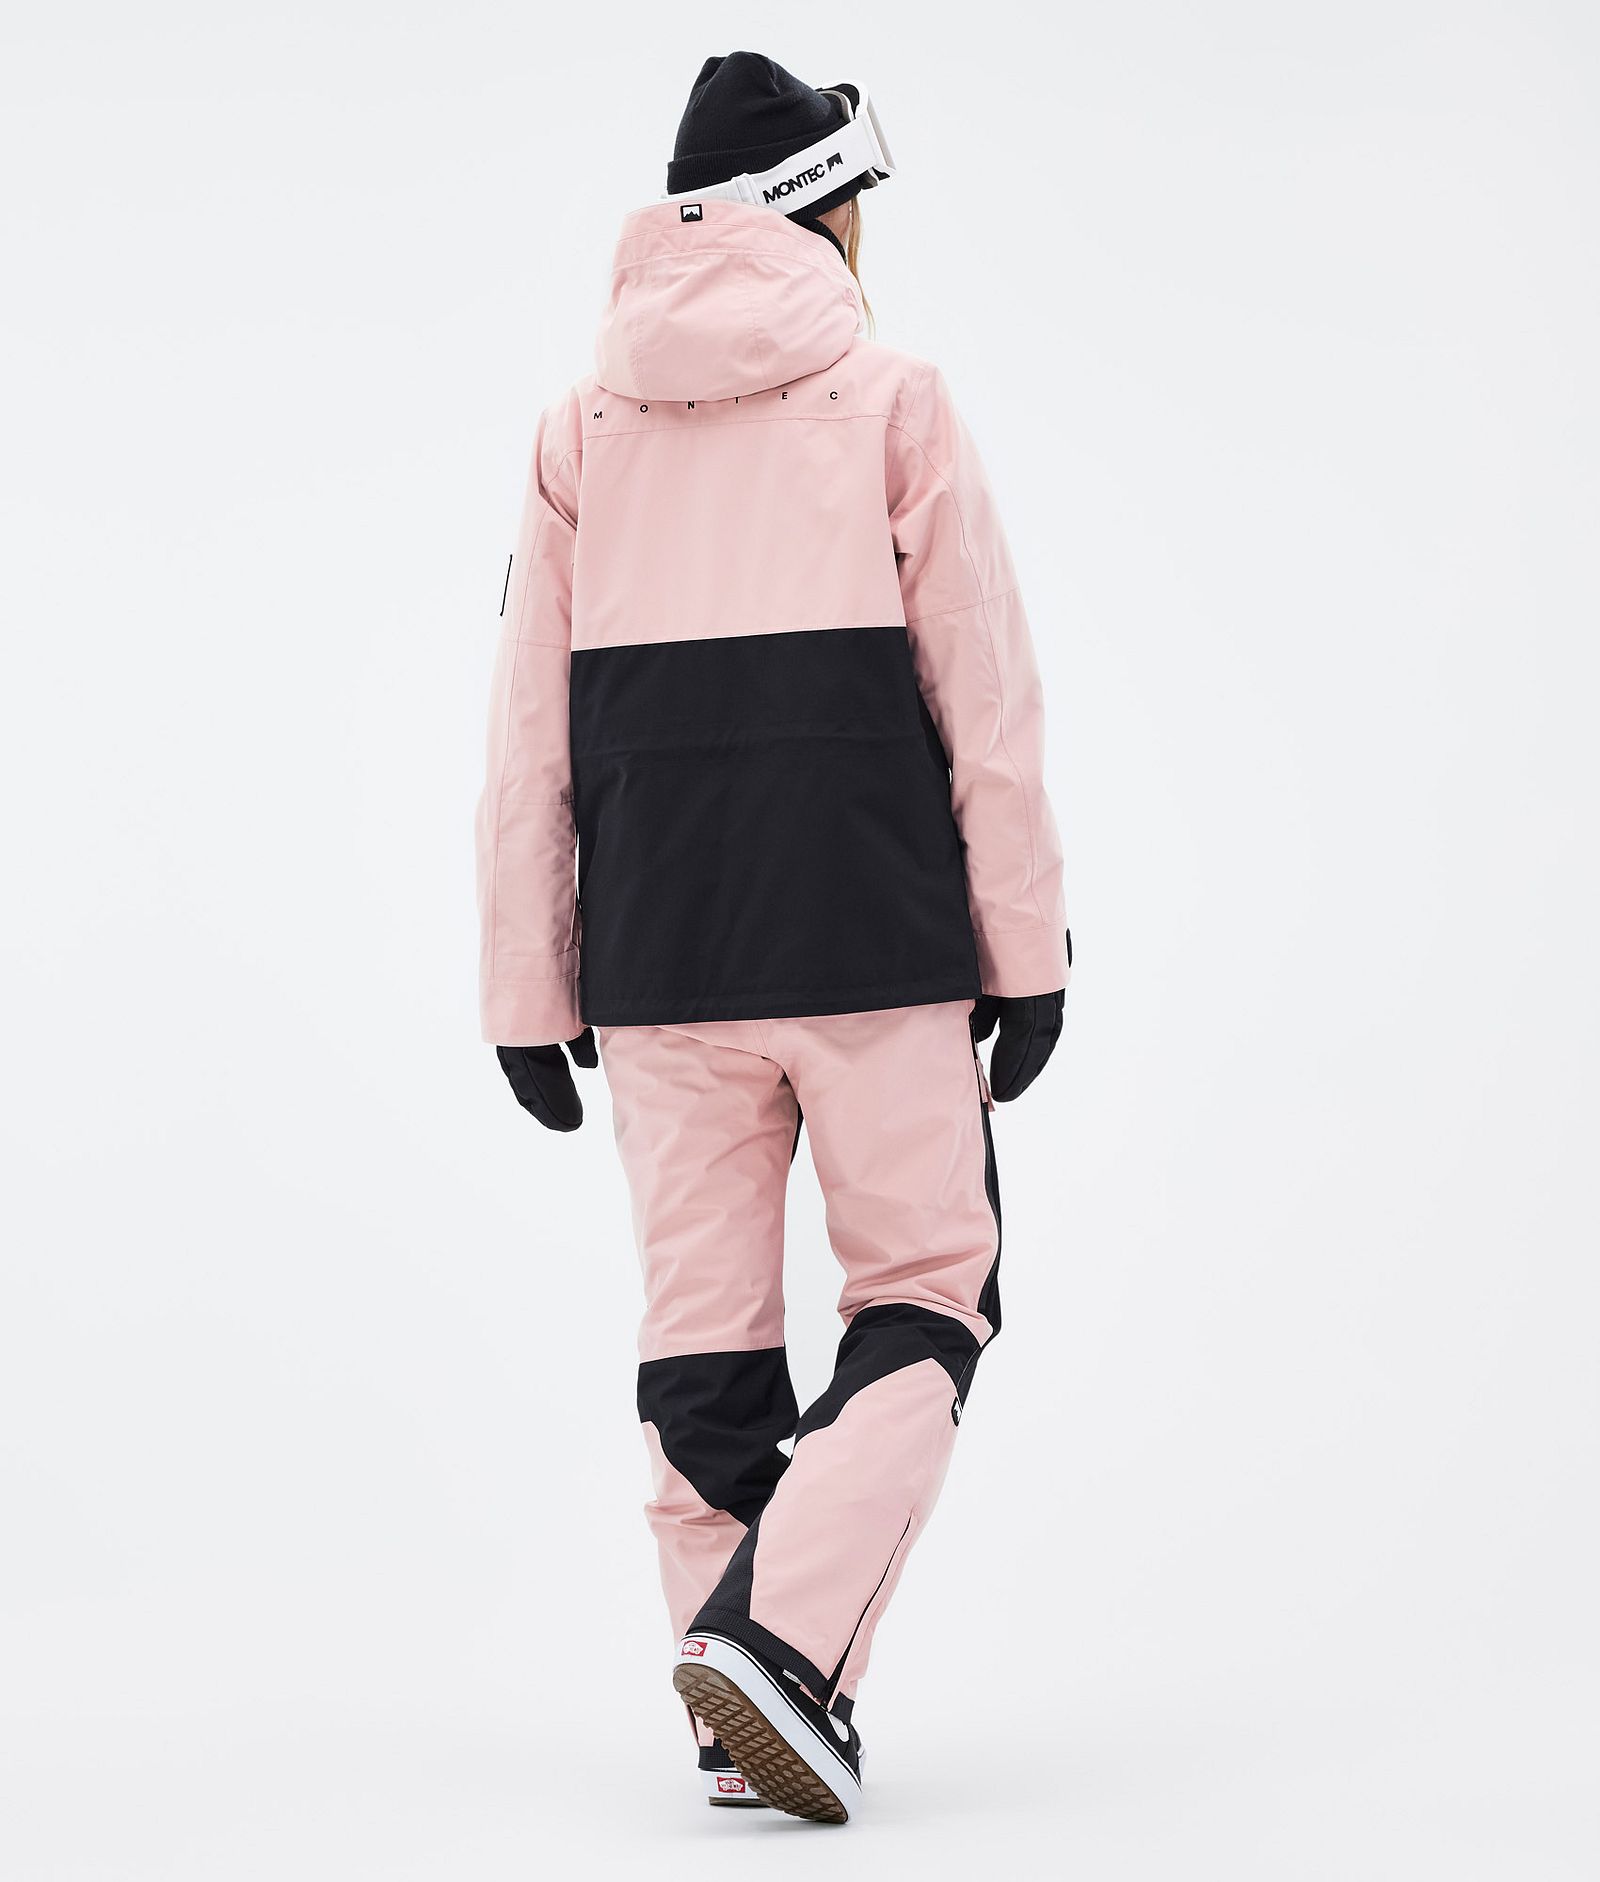 Doom W Snowboard Outfit Women Soft Pink/Black